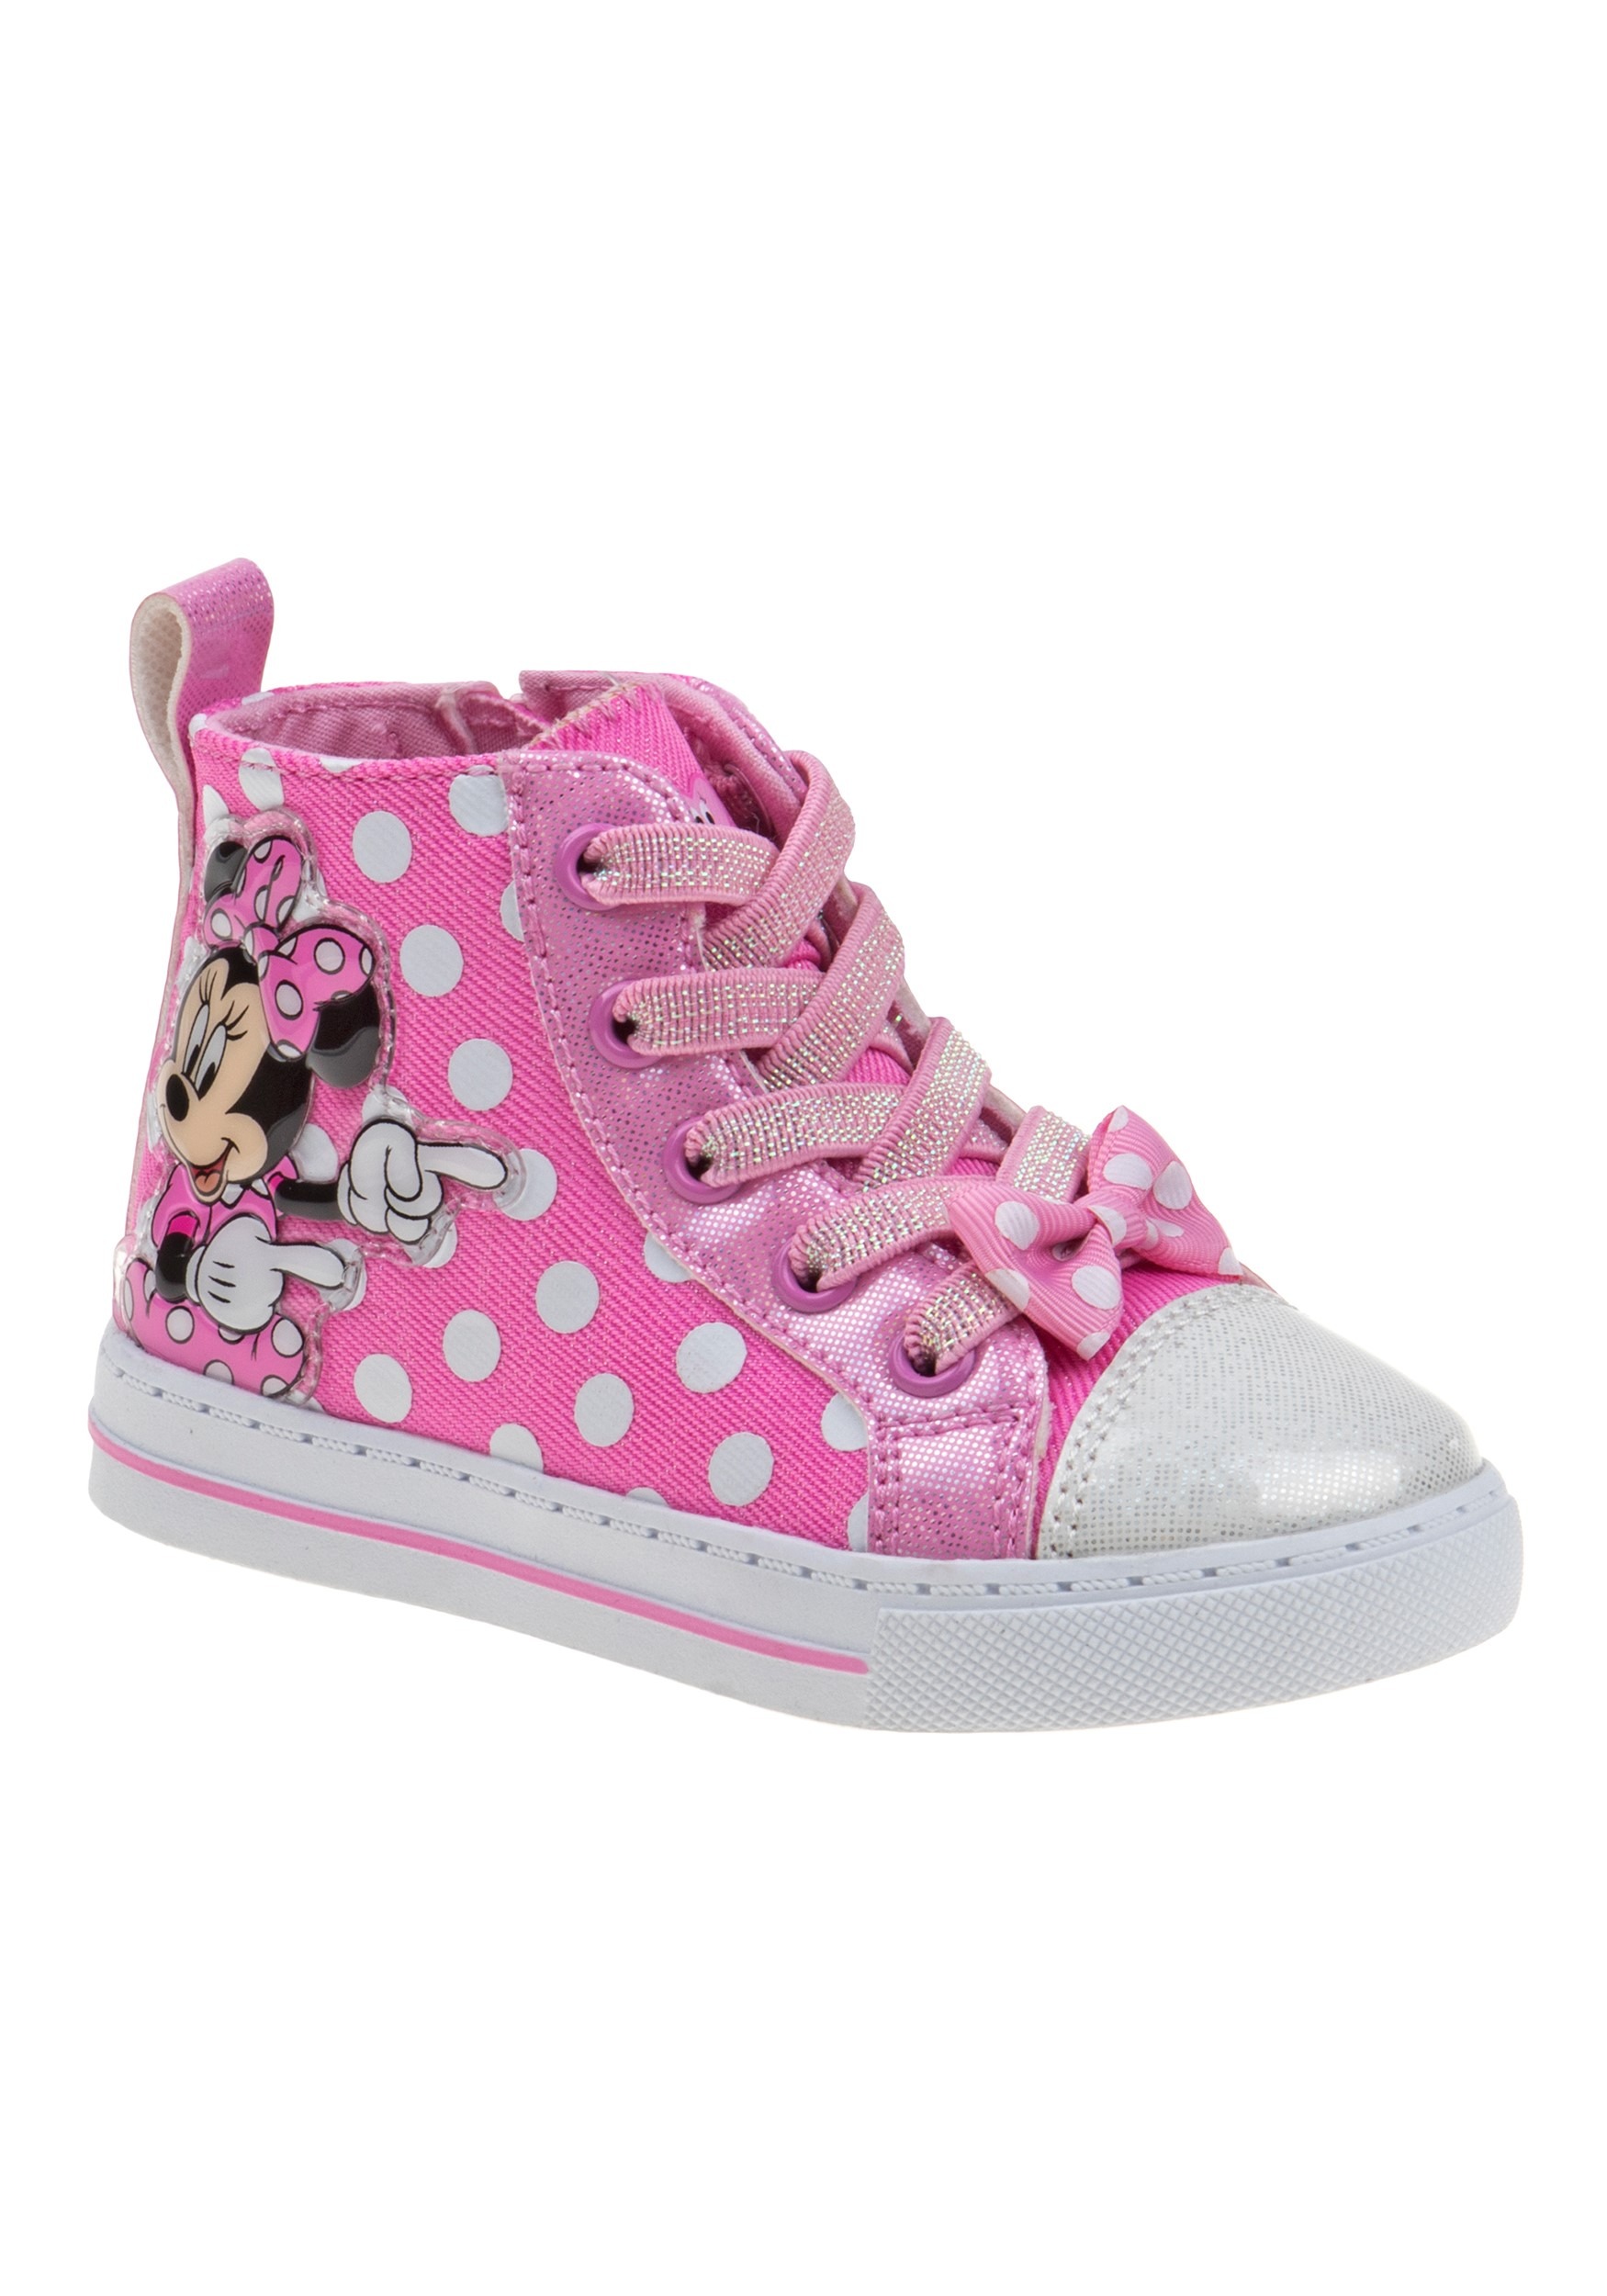 Disney Minnie Mouse Pink Polka Dot Girls Sneakers